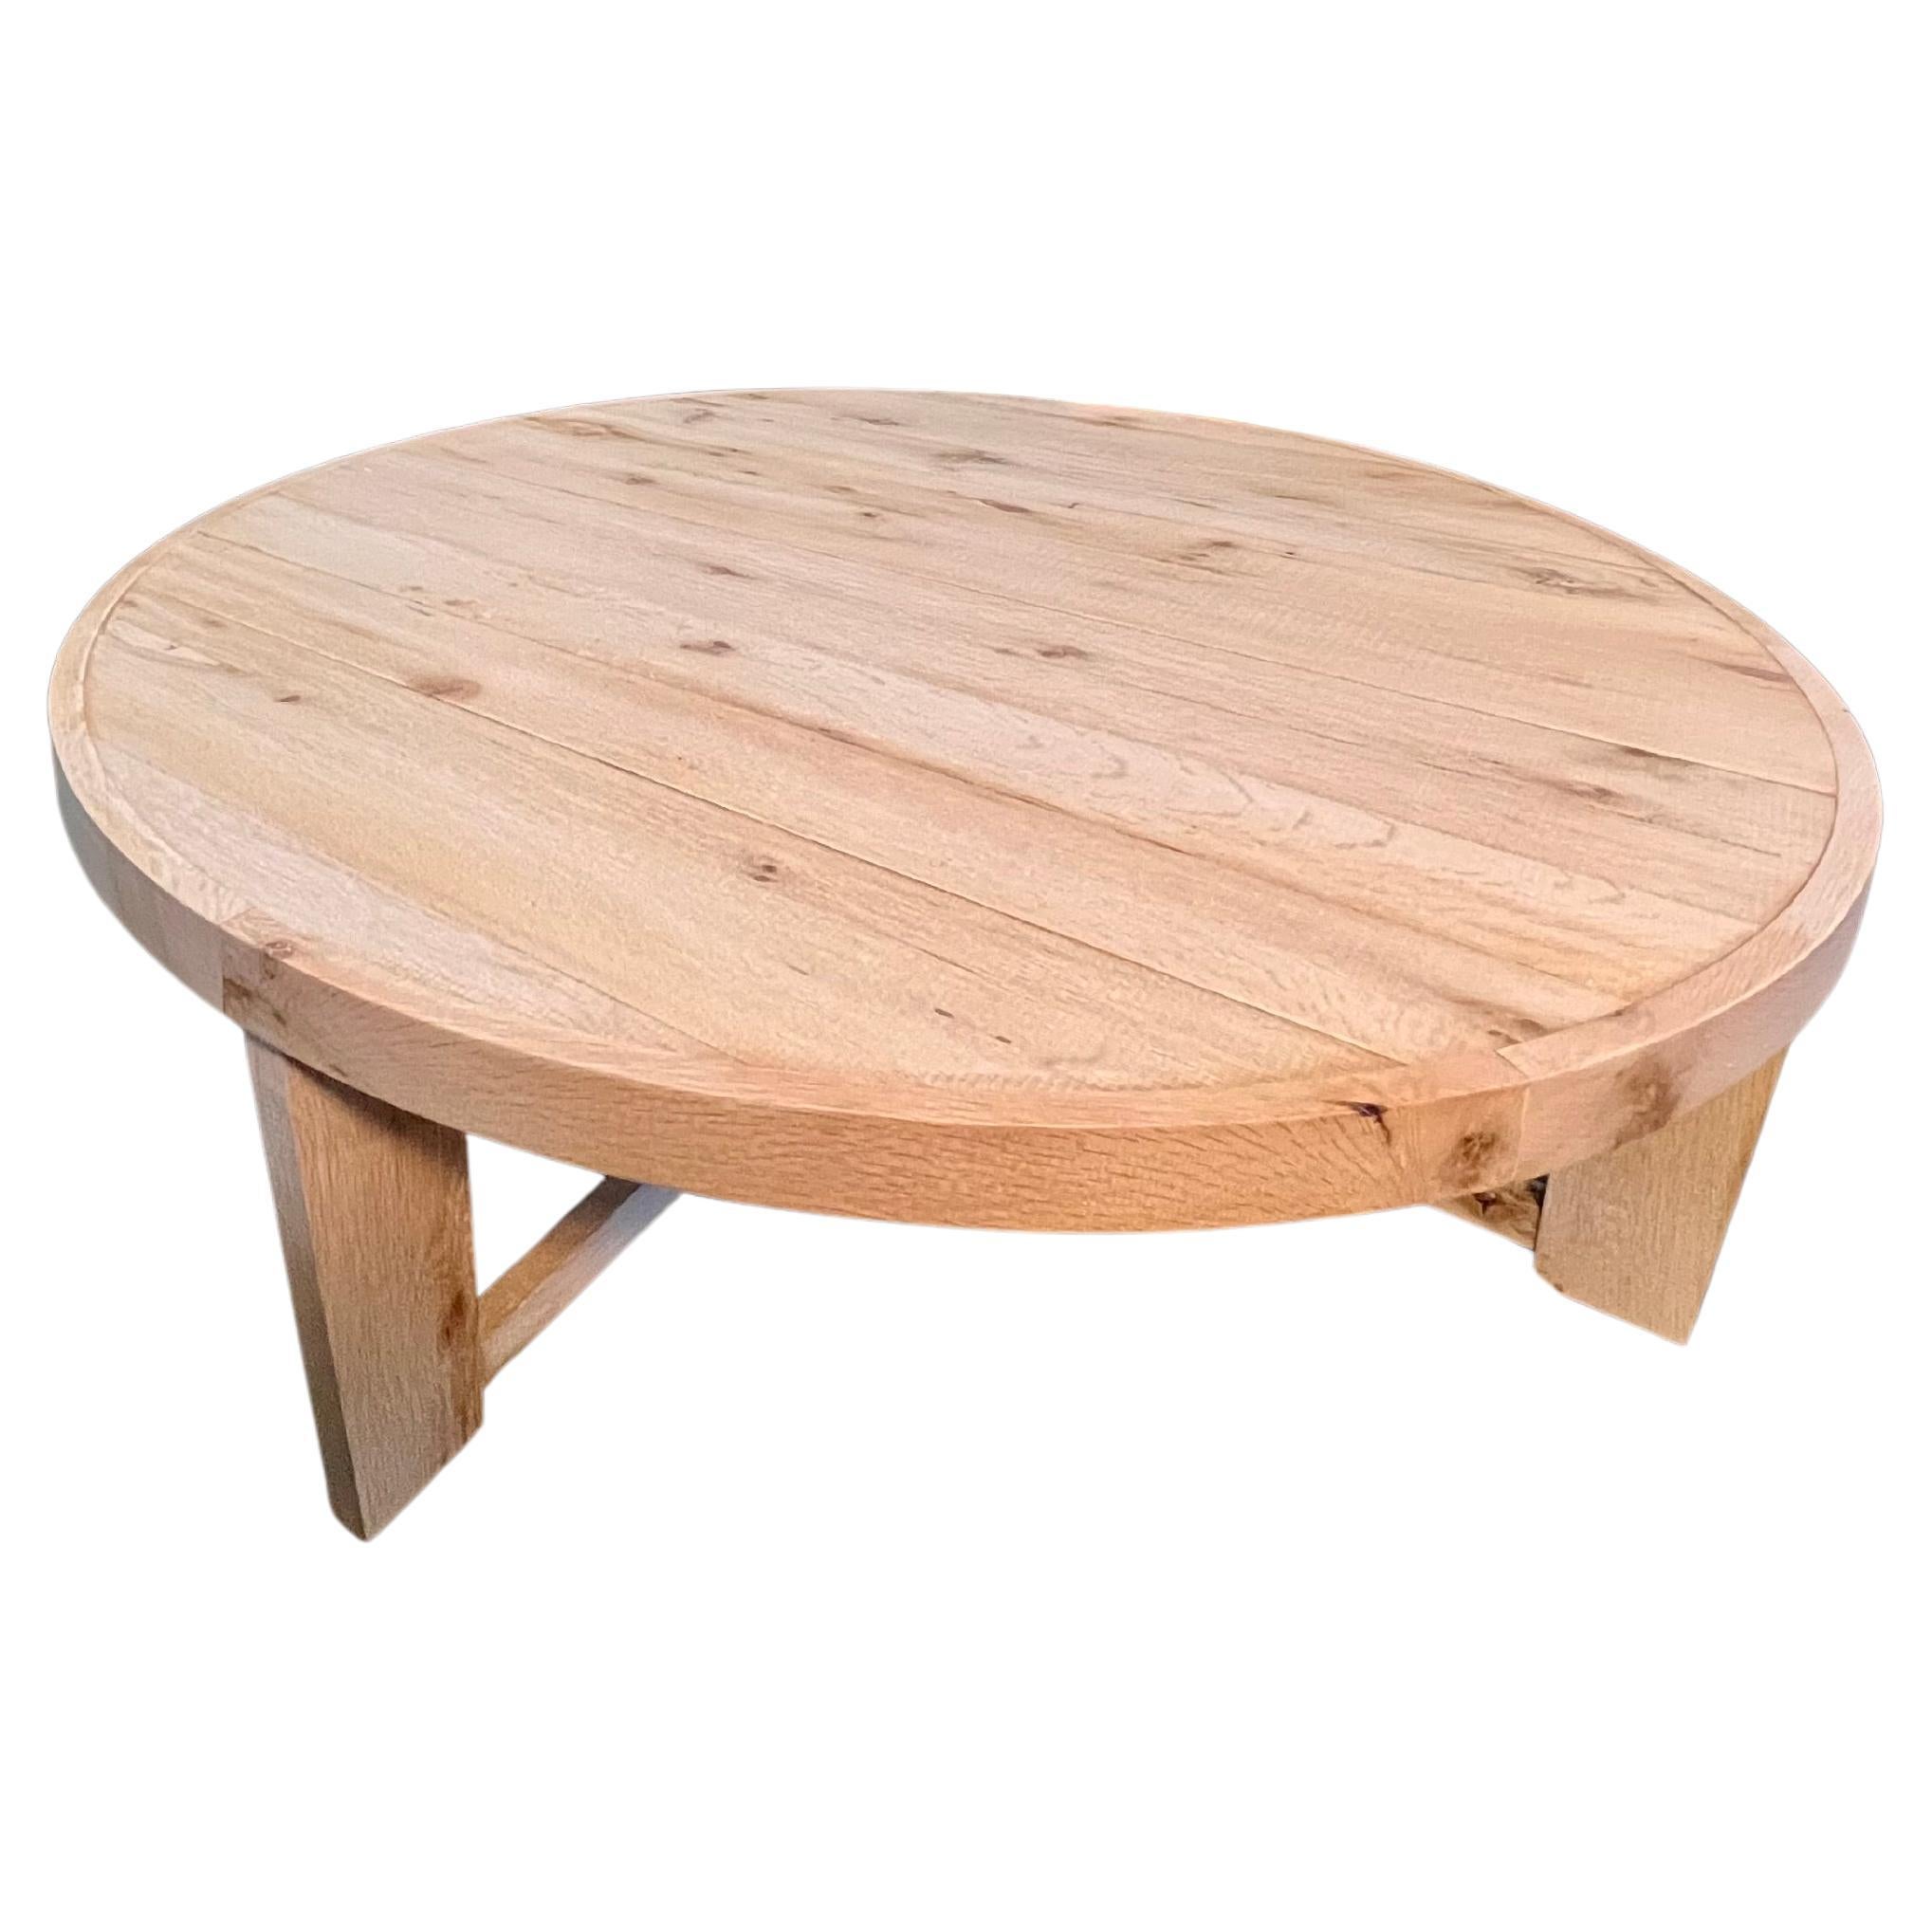 Modern Solid White Oak Handmade Center Table by Fortunata Design For Sale